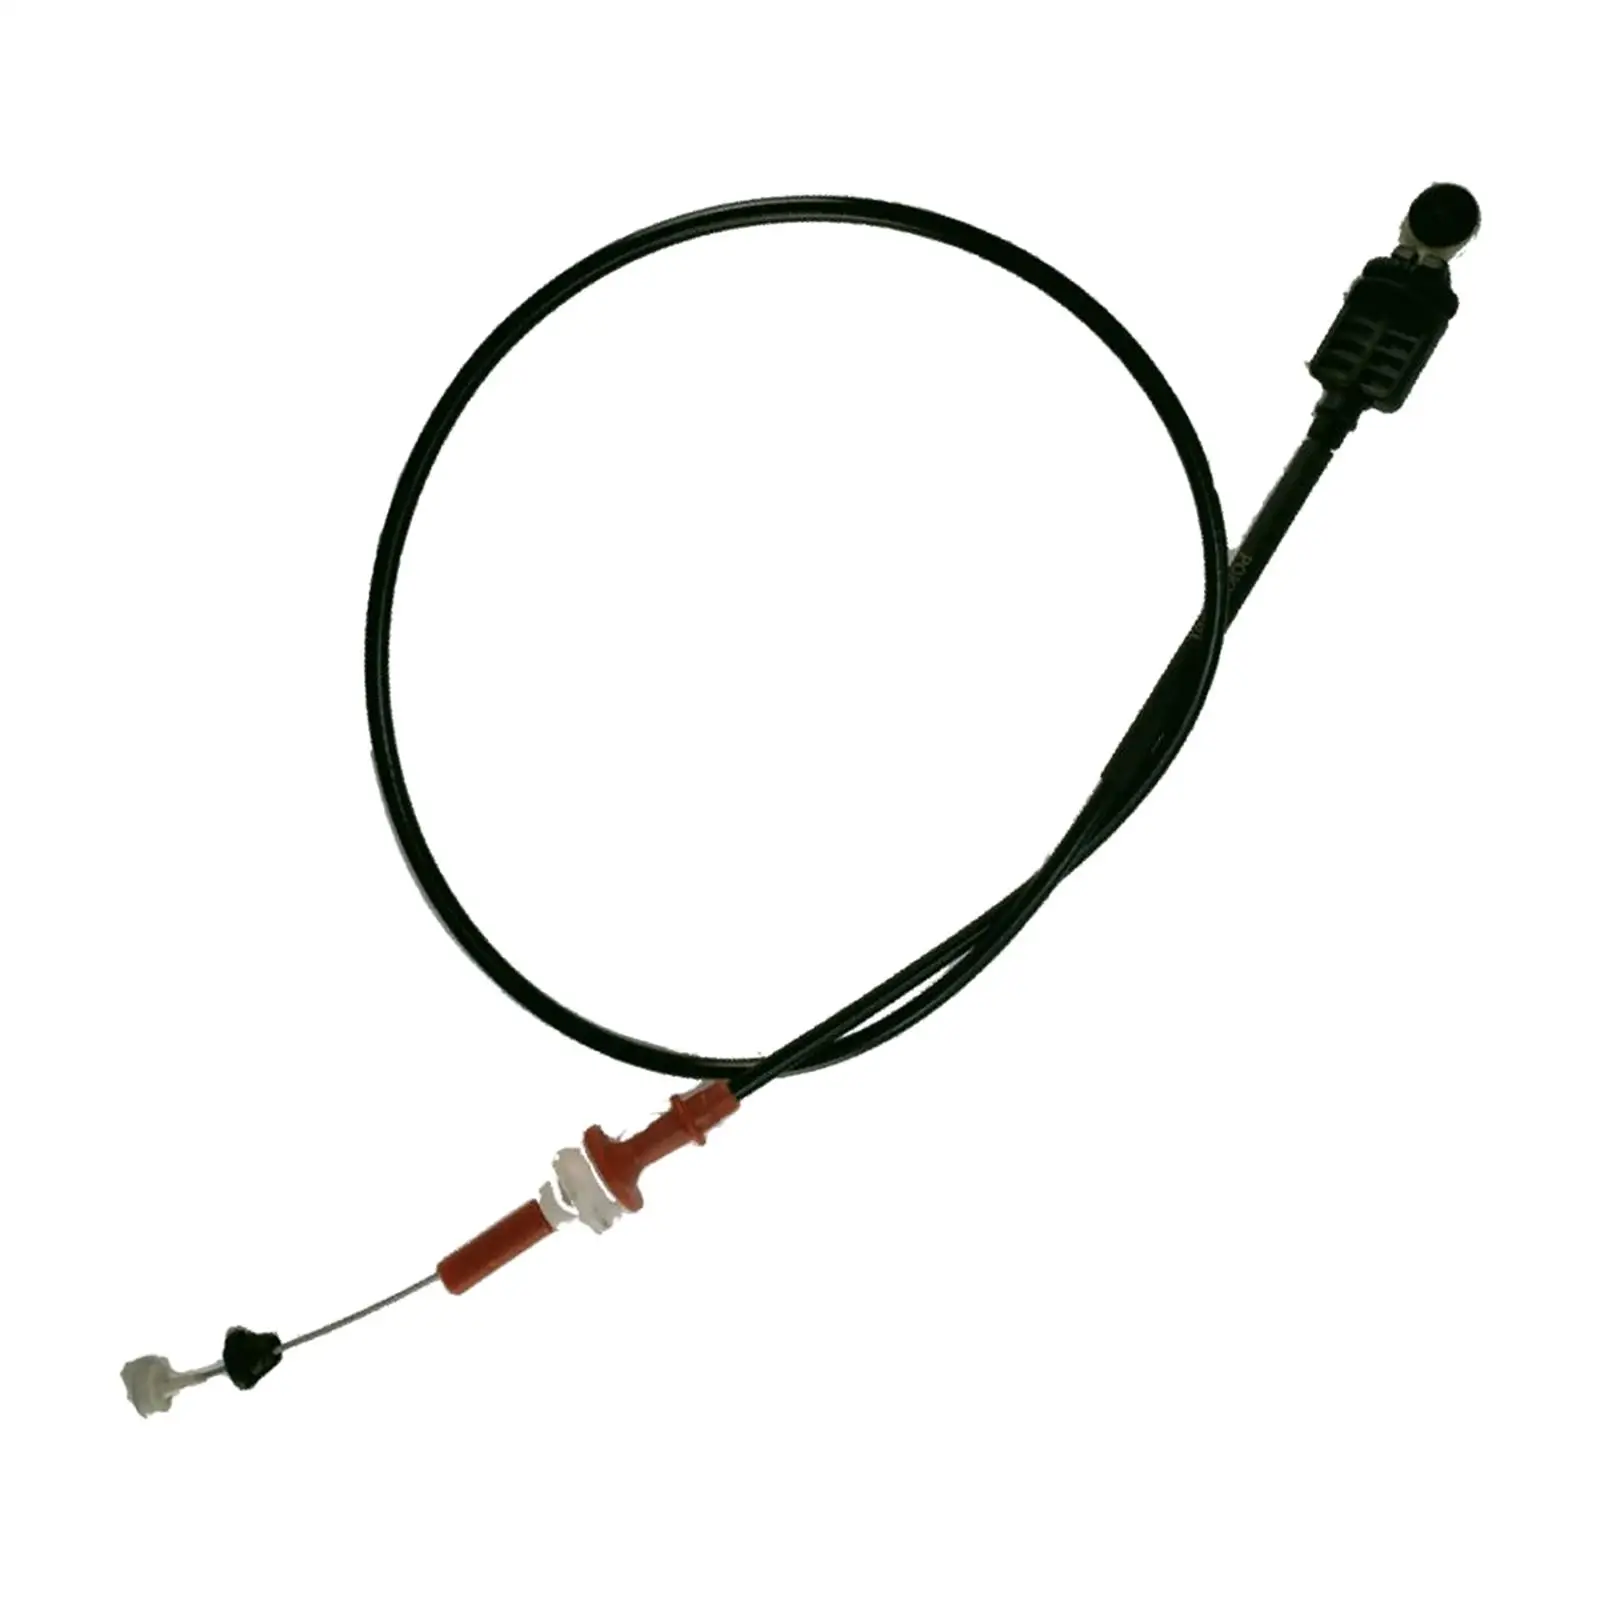 Throttle Oil Cable Line Car Accessories Replaces Spare Parts 1S719C799DG 3S719C799BA 1S71-9C799-dg for Mondeo MK3 2003-2006